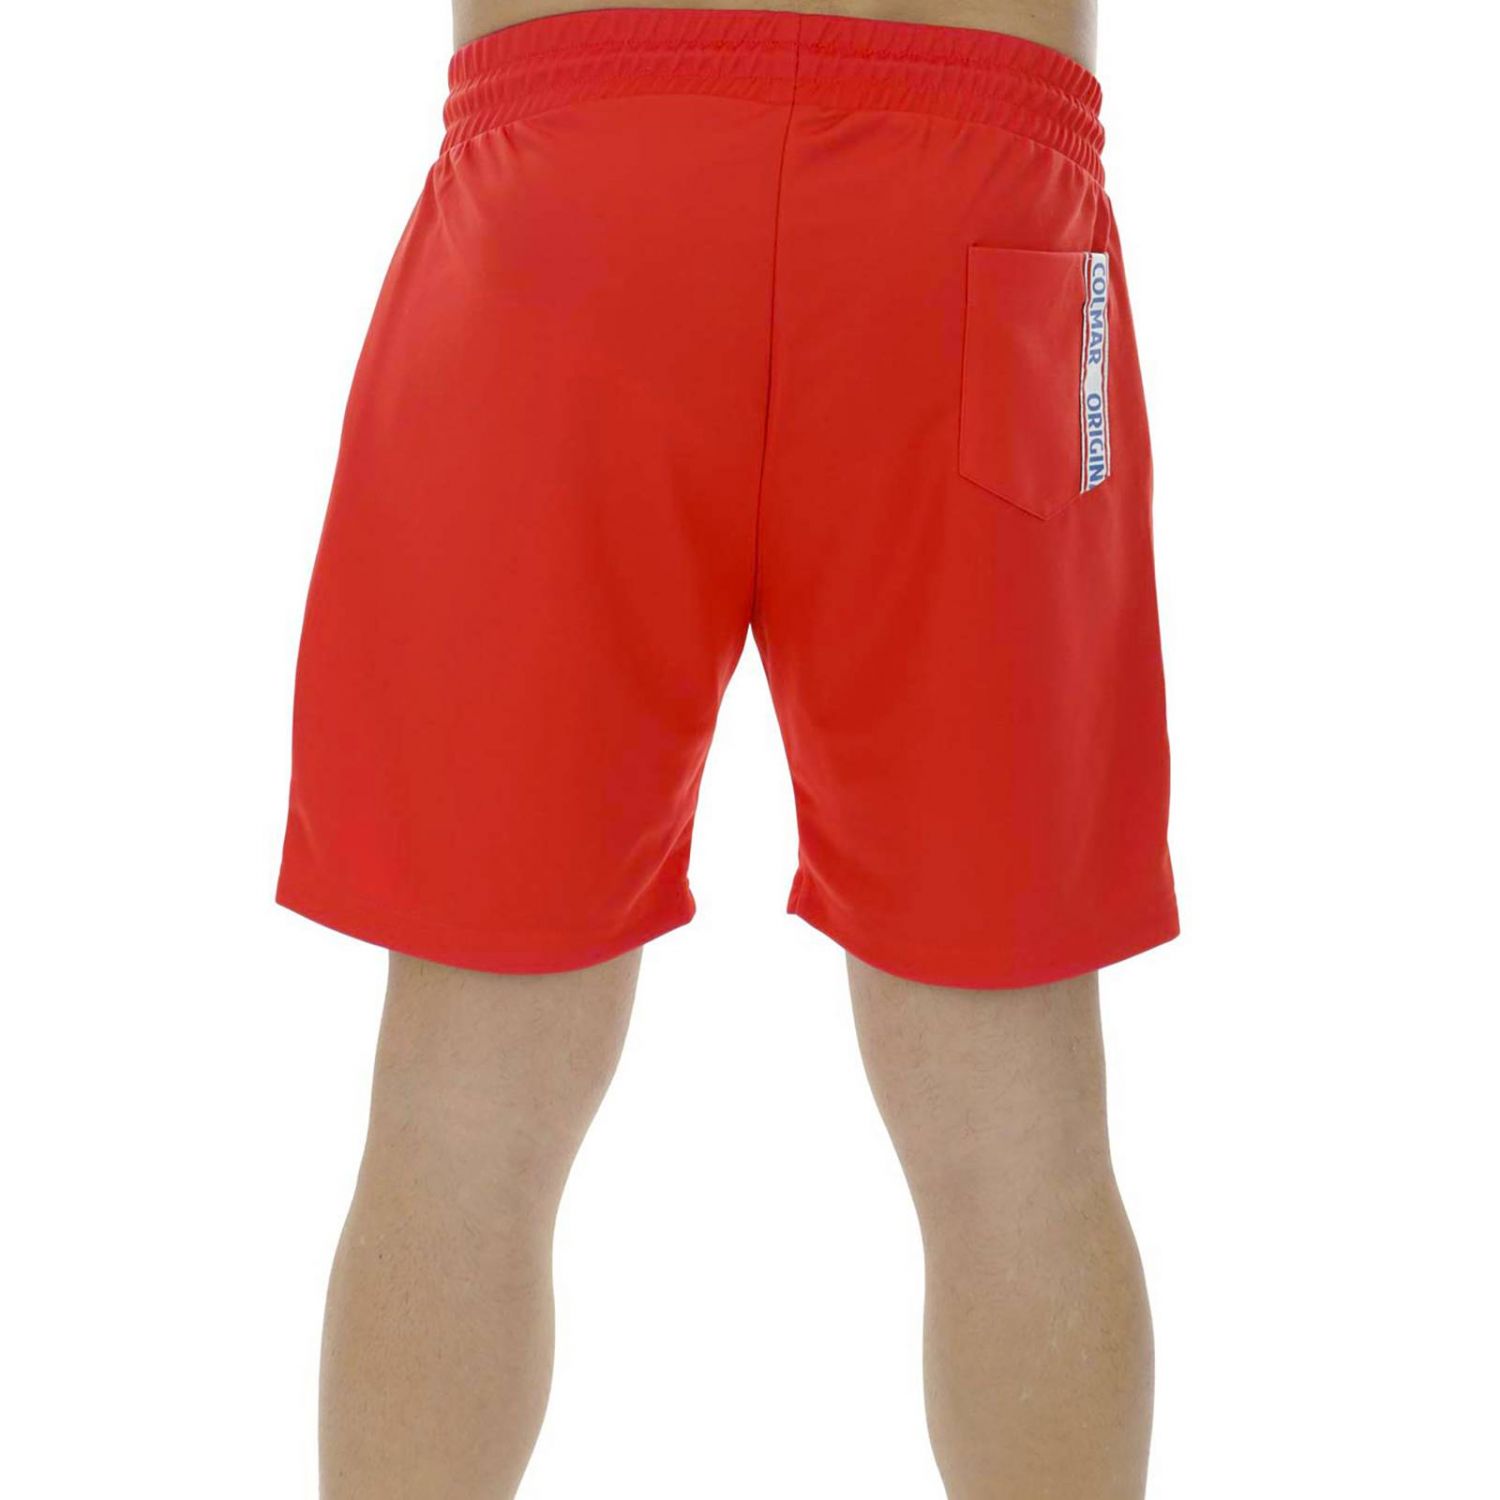 Colmar Outlet: Bermuda shorts men - Red | Short Colmar 8259 6TH GIGLIO.COM